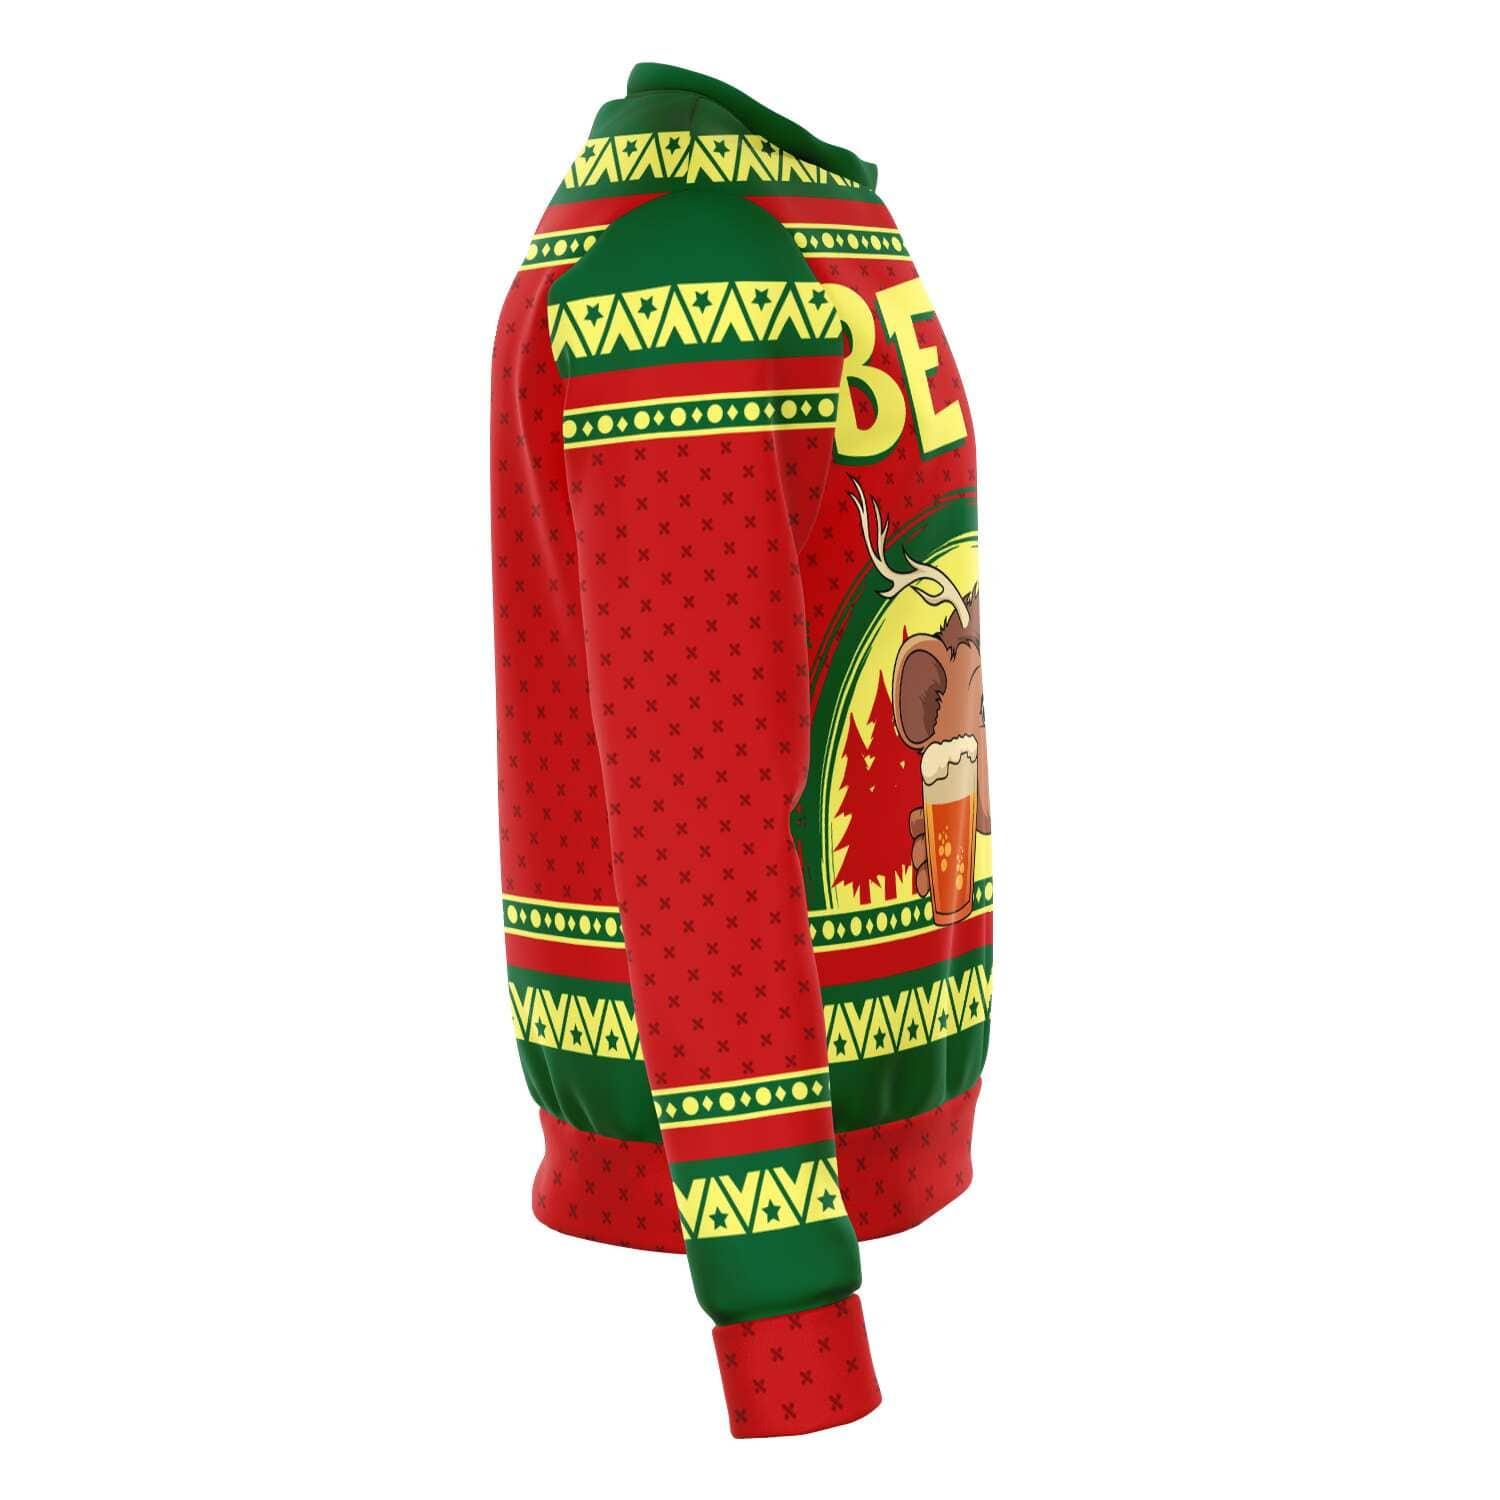 beer-deer-unisex-ugly-christmas-sweatshirt